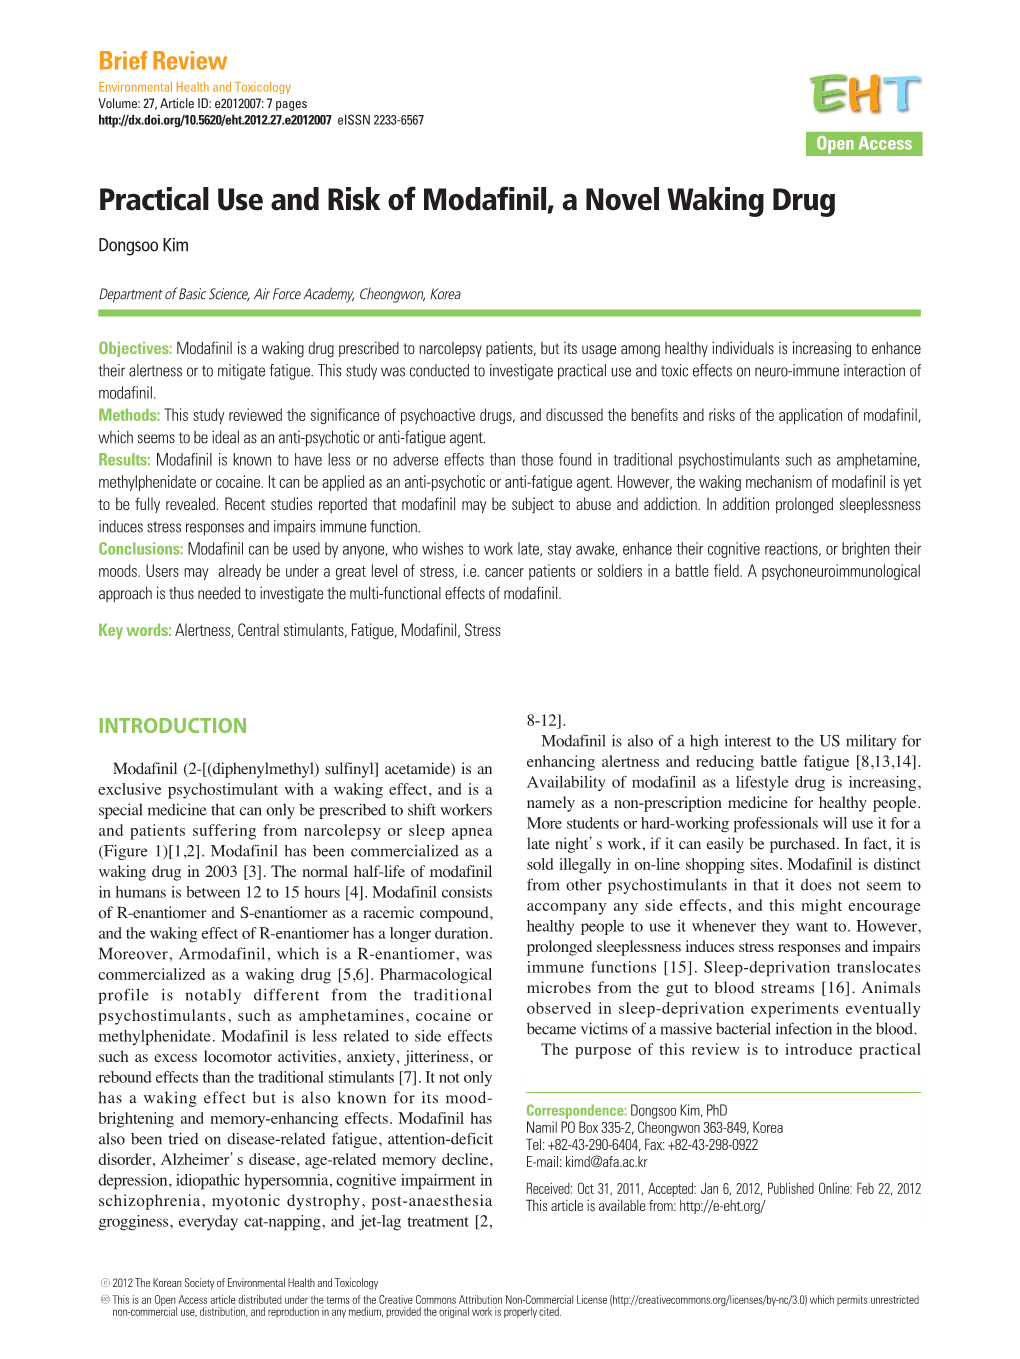 Practical Use and Risk of Modafinil, a Novel Waking Drug